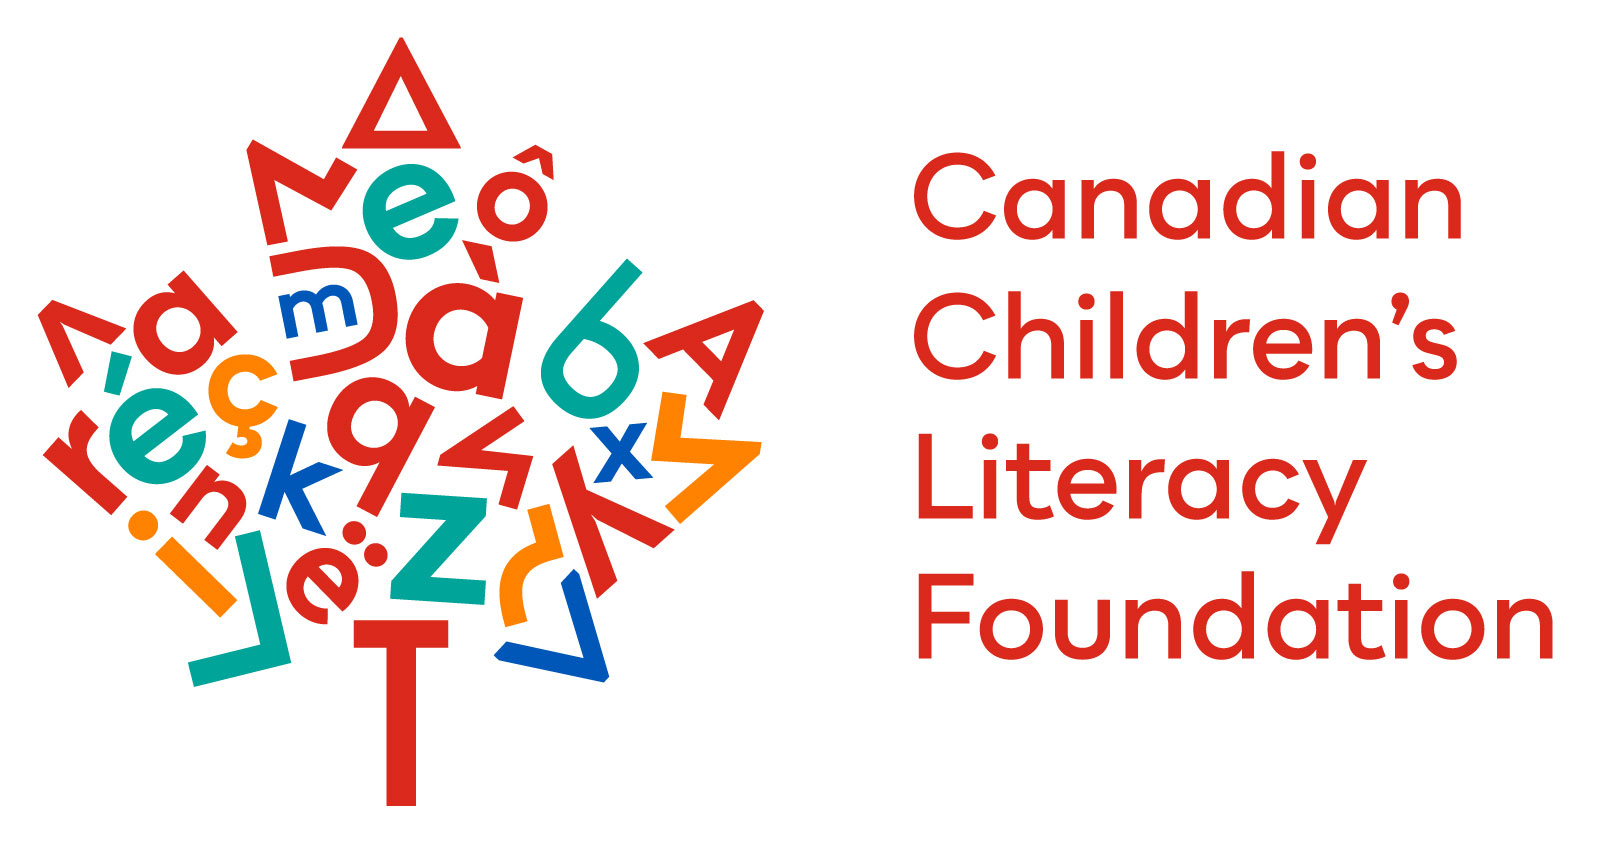 Canadian Children's Literacy Foundation